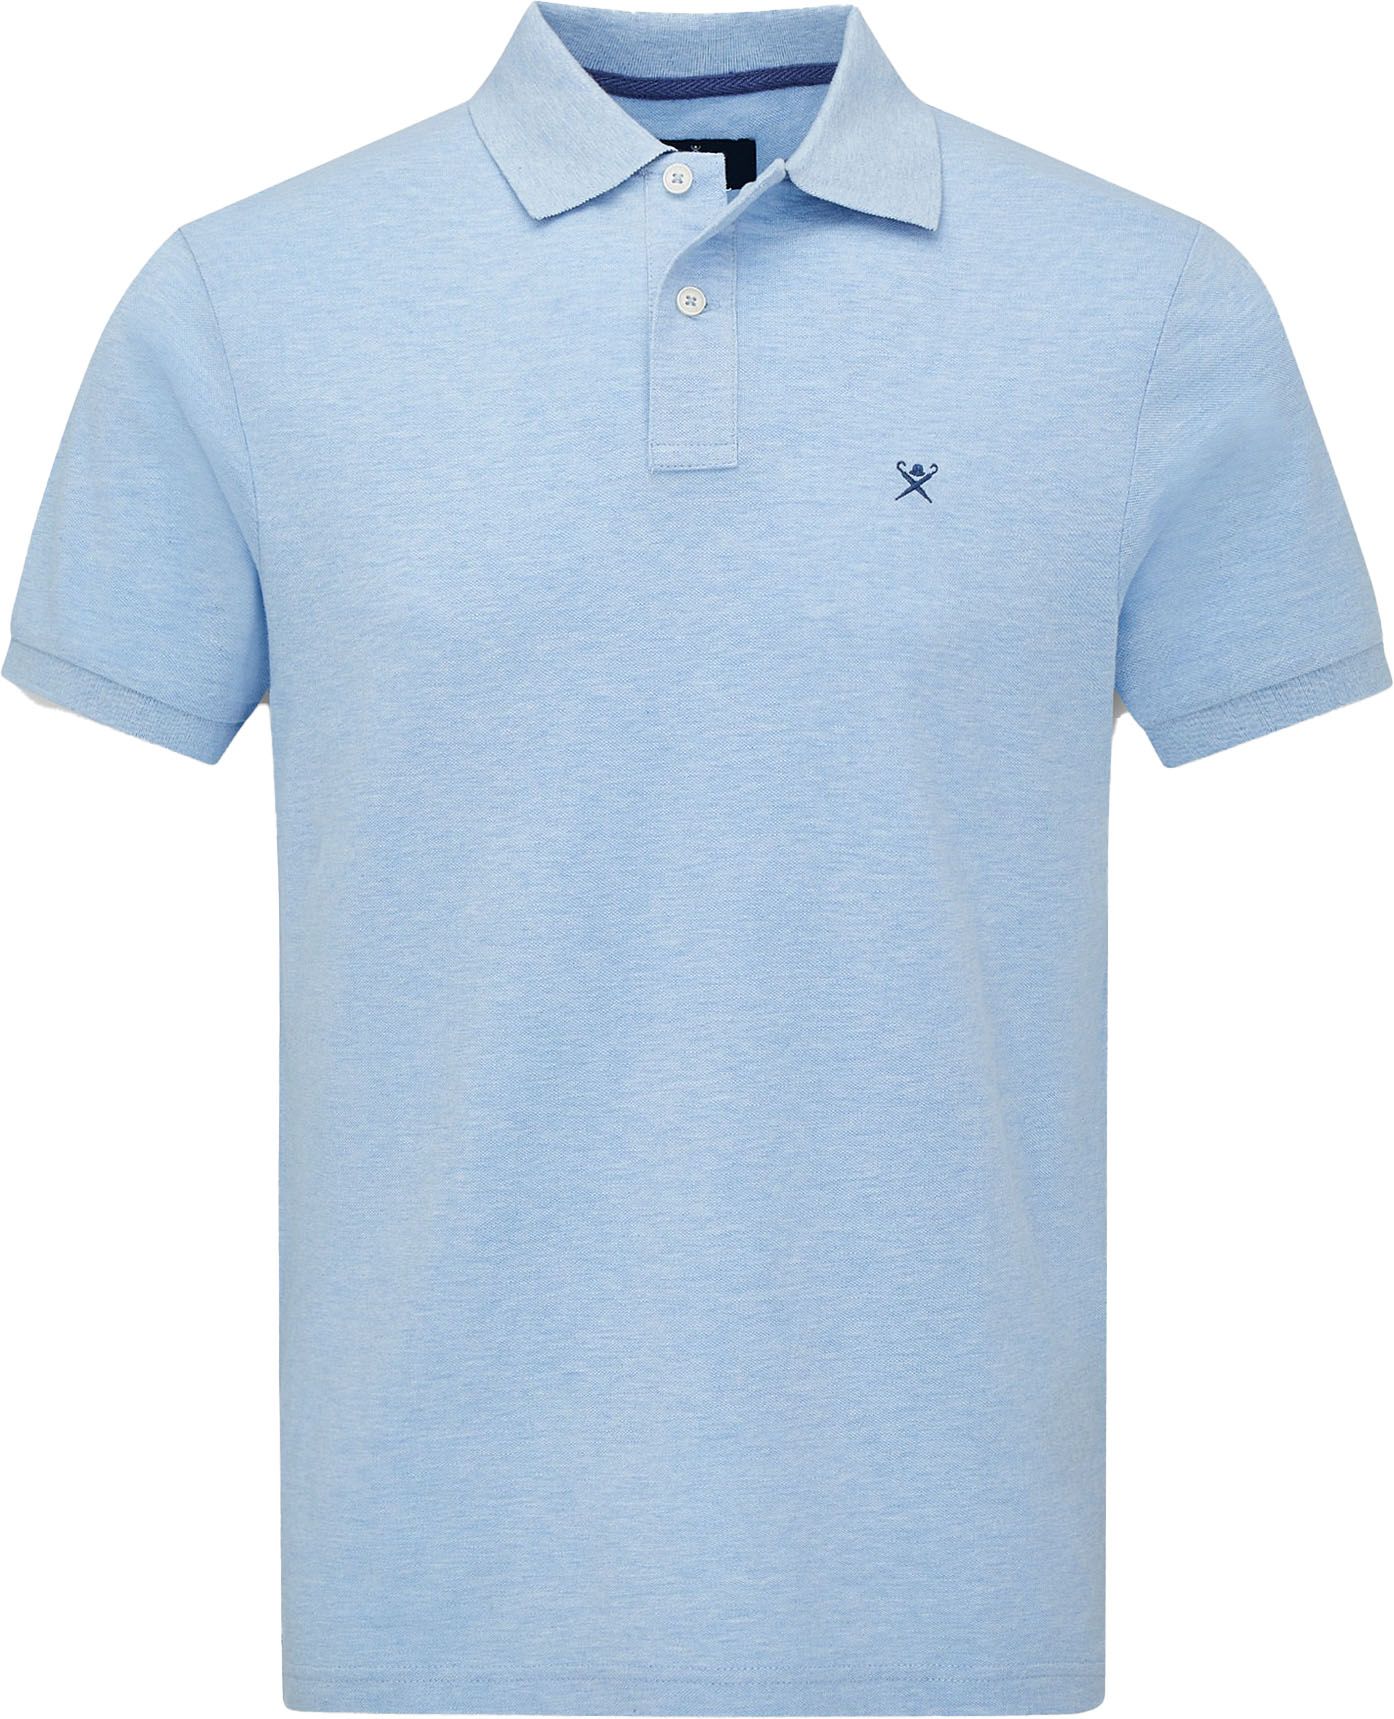 Hackett Polo Shirt Light Blue size L